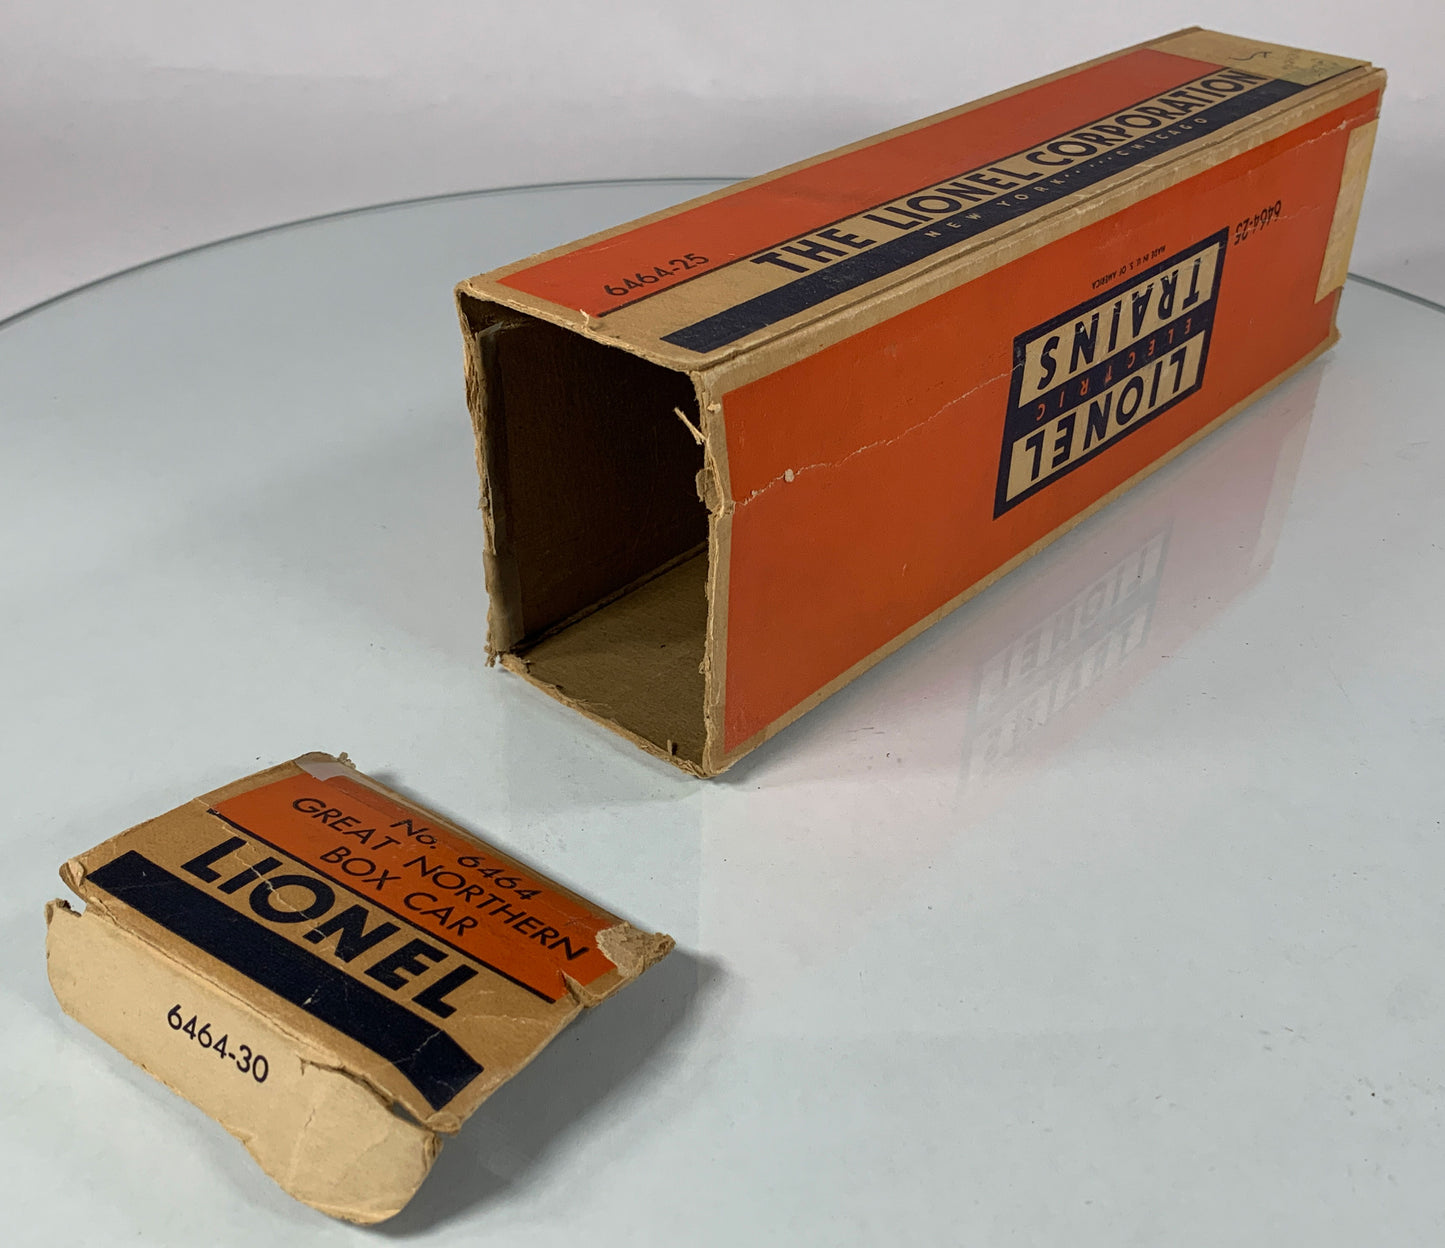 LIONEL • O GAUGE • 1953-1954 Postwar 6464-25 Great Northern Boxcar w Orig Box • EX COND